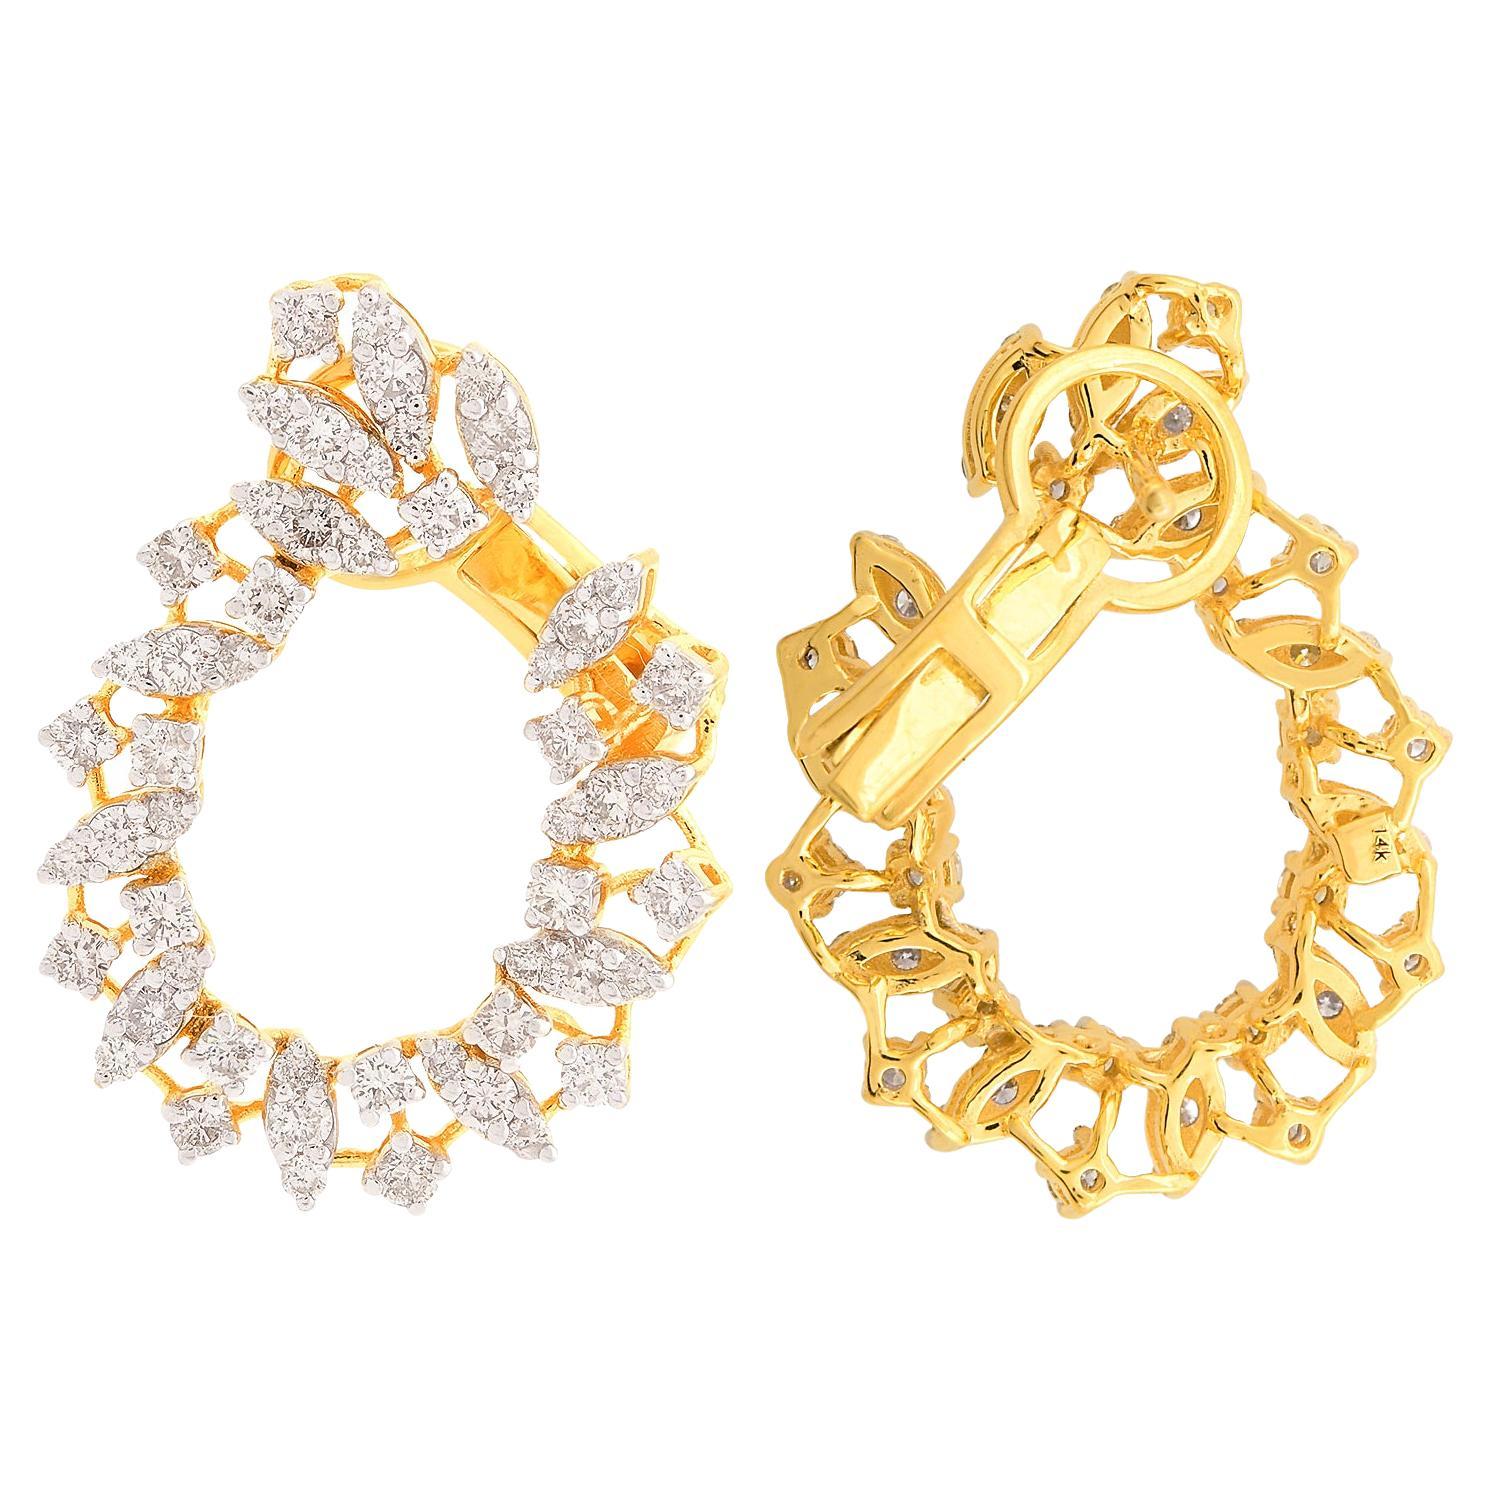 2.07 Carat SI Clarity HI Color Diamond Hoop Earrings 14k Yellow Gold Jewelry